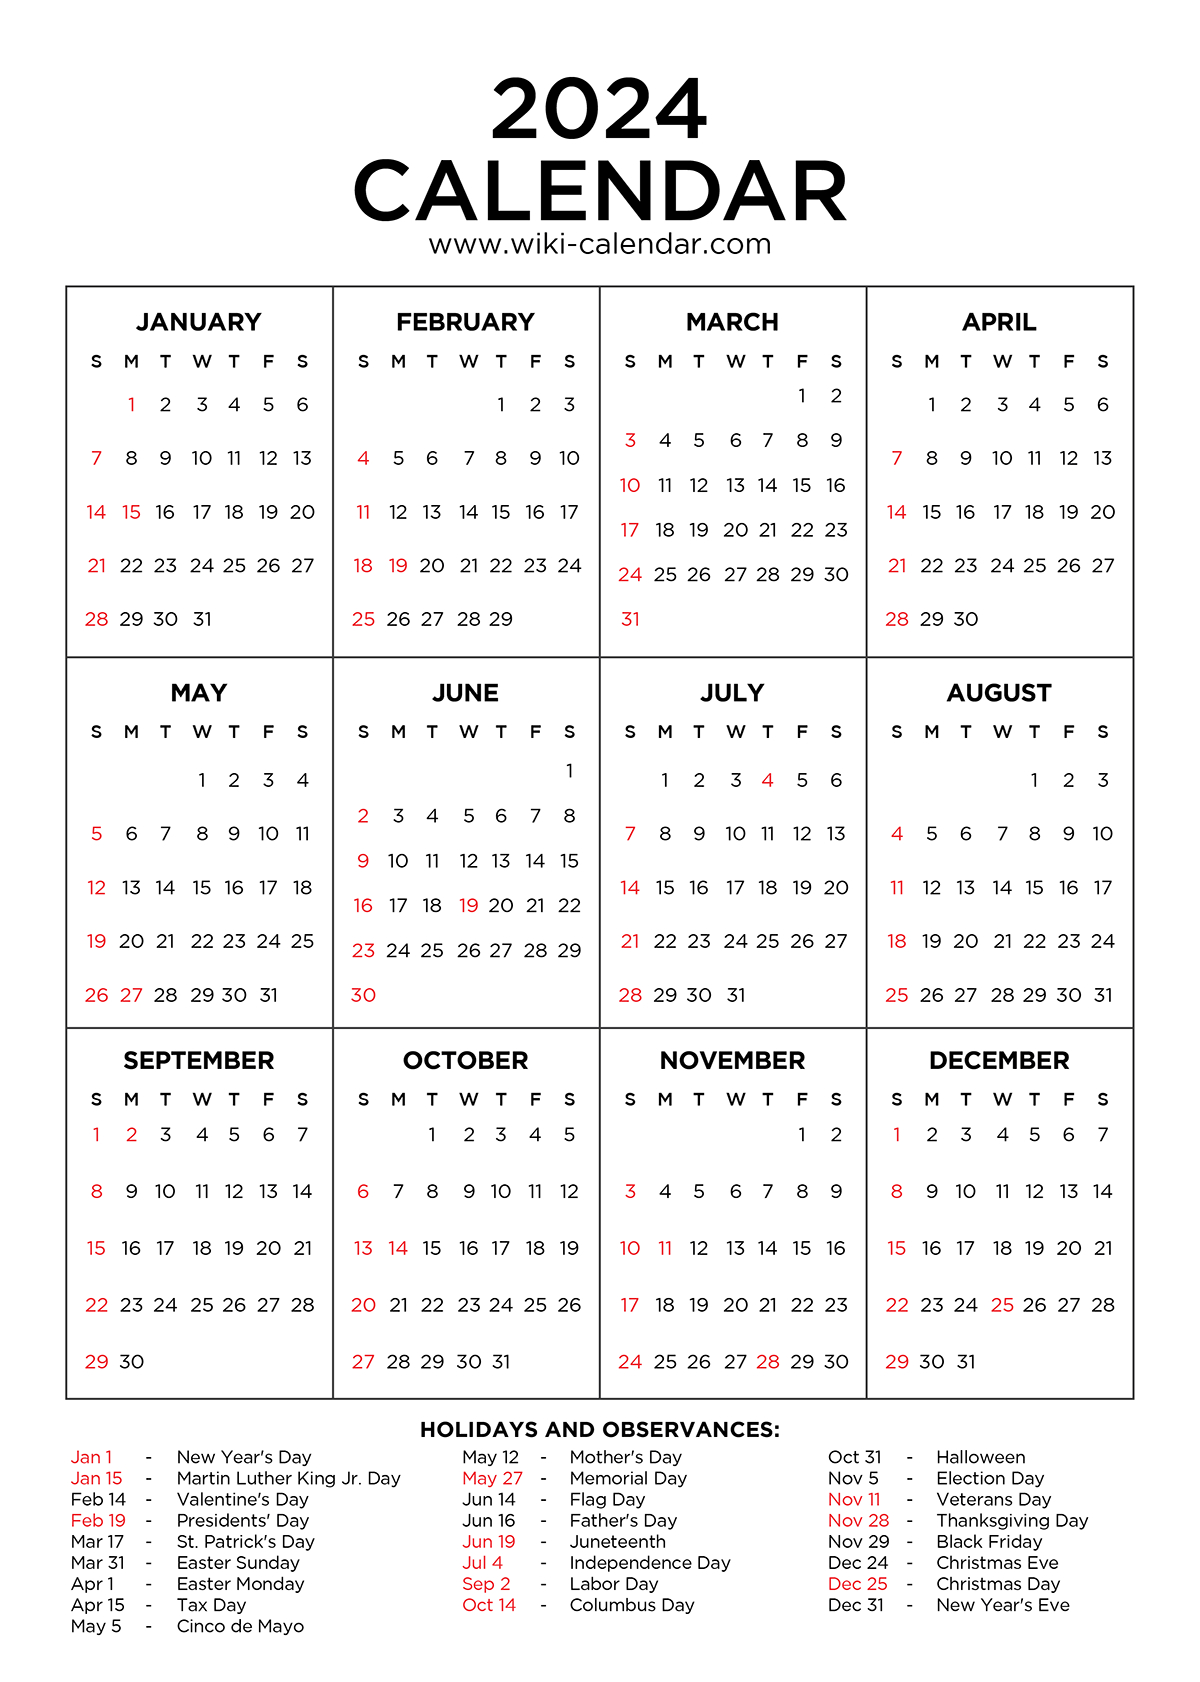 Year 2024 Calendar Printable With Holidays - Wiki Calendar | Printable Calendar 2024 January Wiki